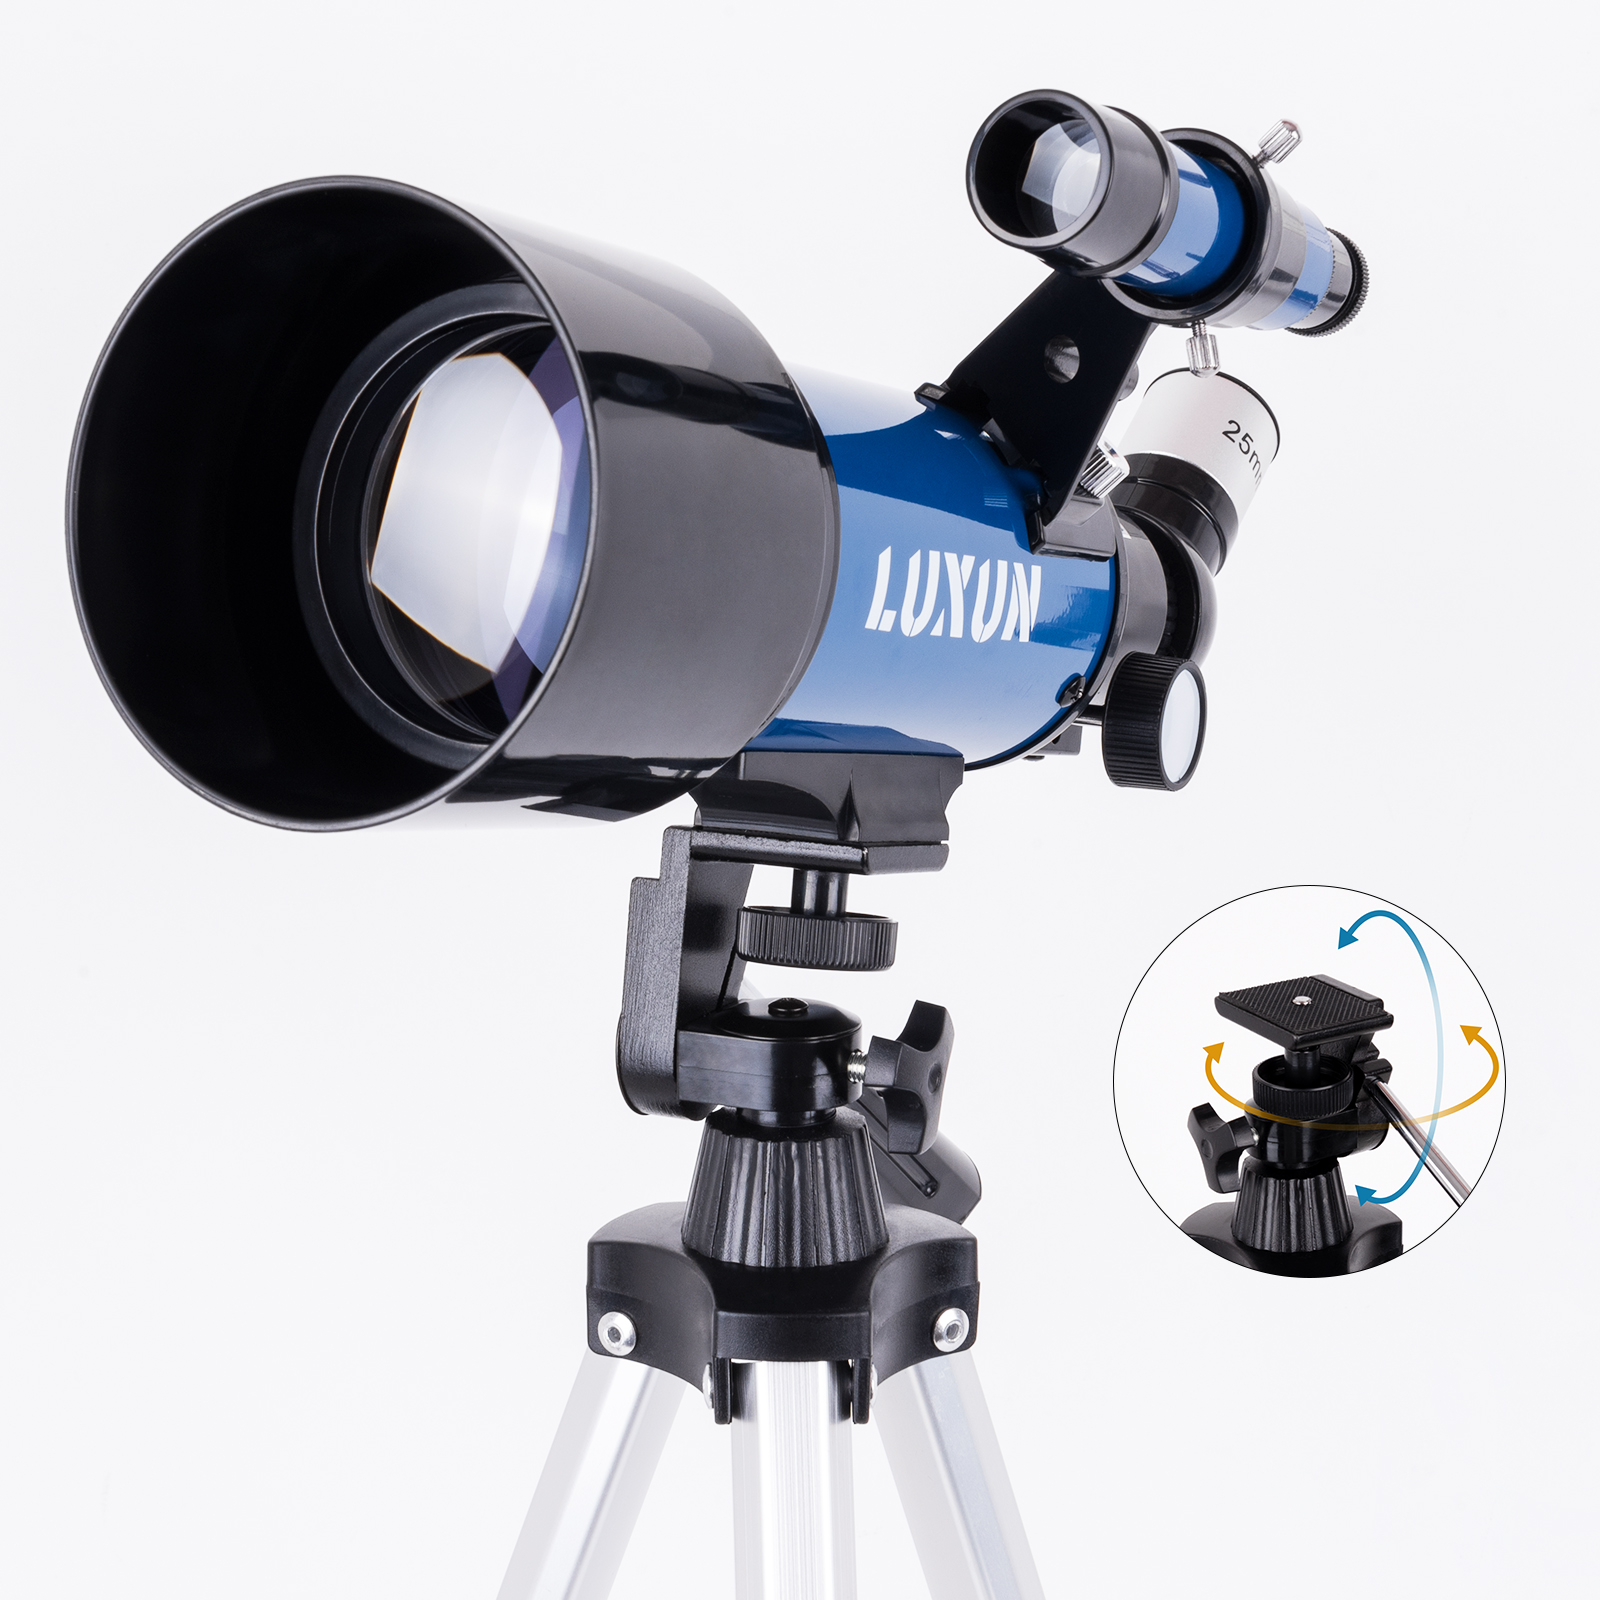 LUXUN-40070-Professional-Astronomical-Telescope-FMC-Lens-Coating-3X-Magnification-Monocular-Telescop-1844691-1